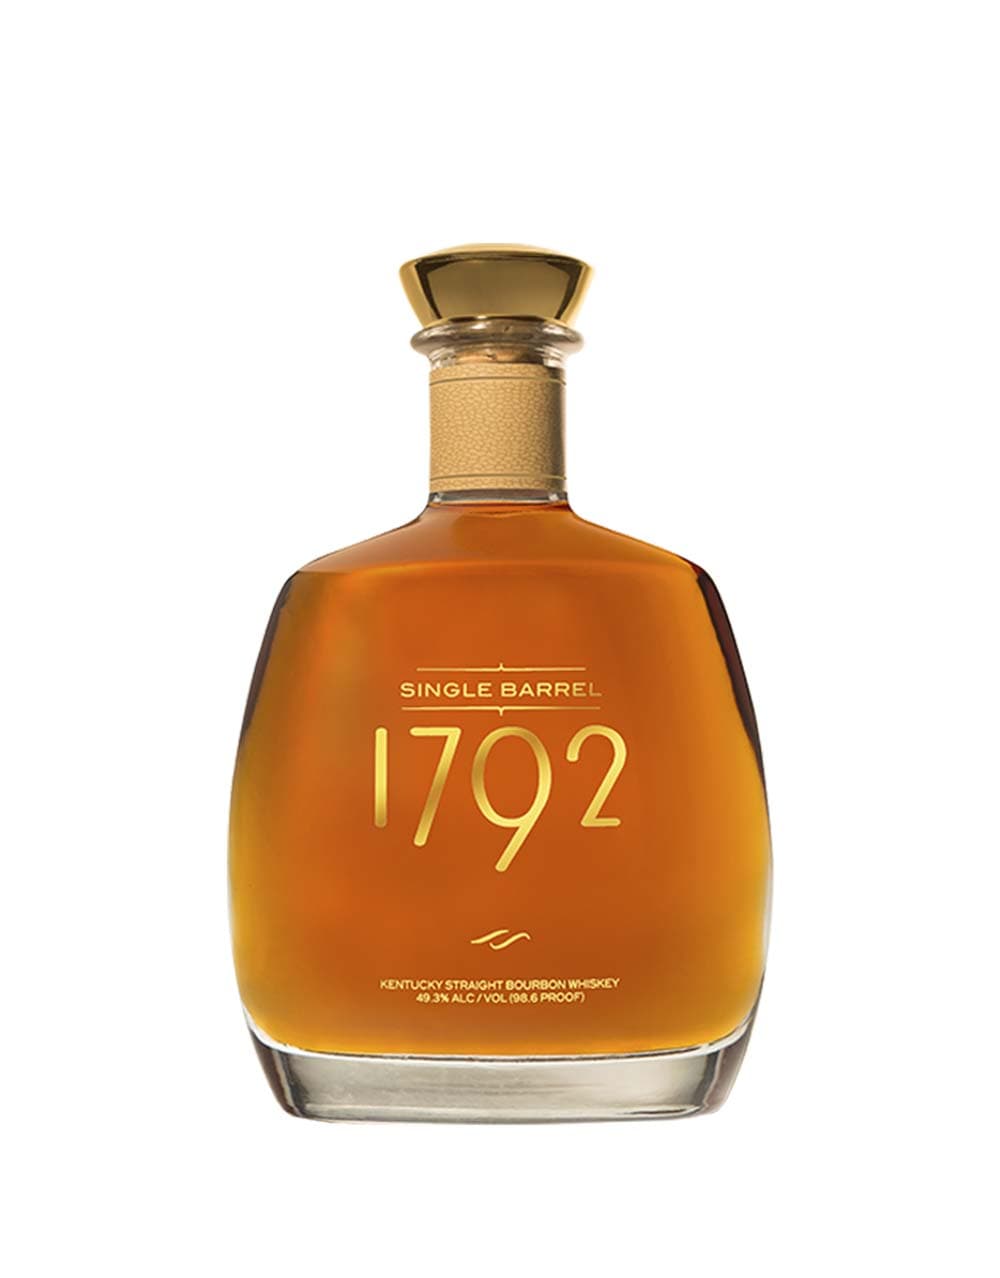 1792 Single Barrel Kentucky Straight Bourbon Whiskey -750ml